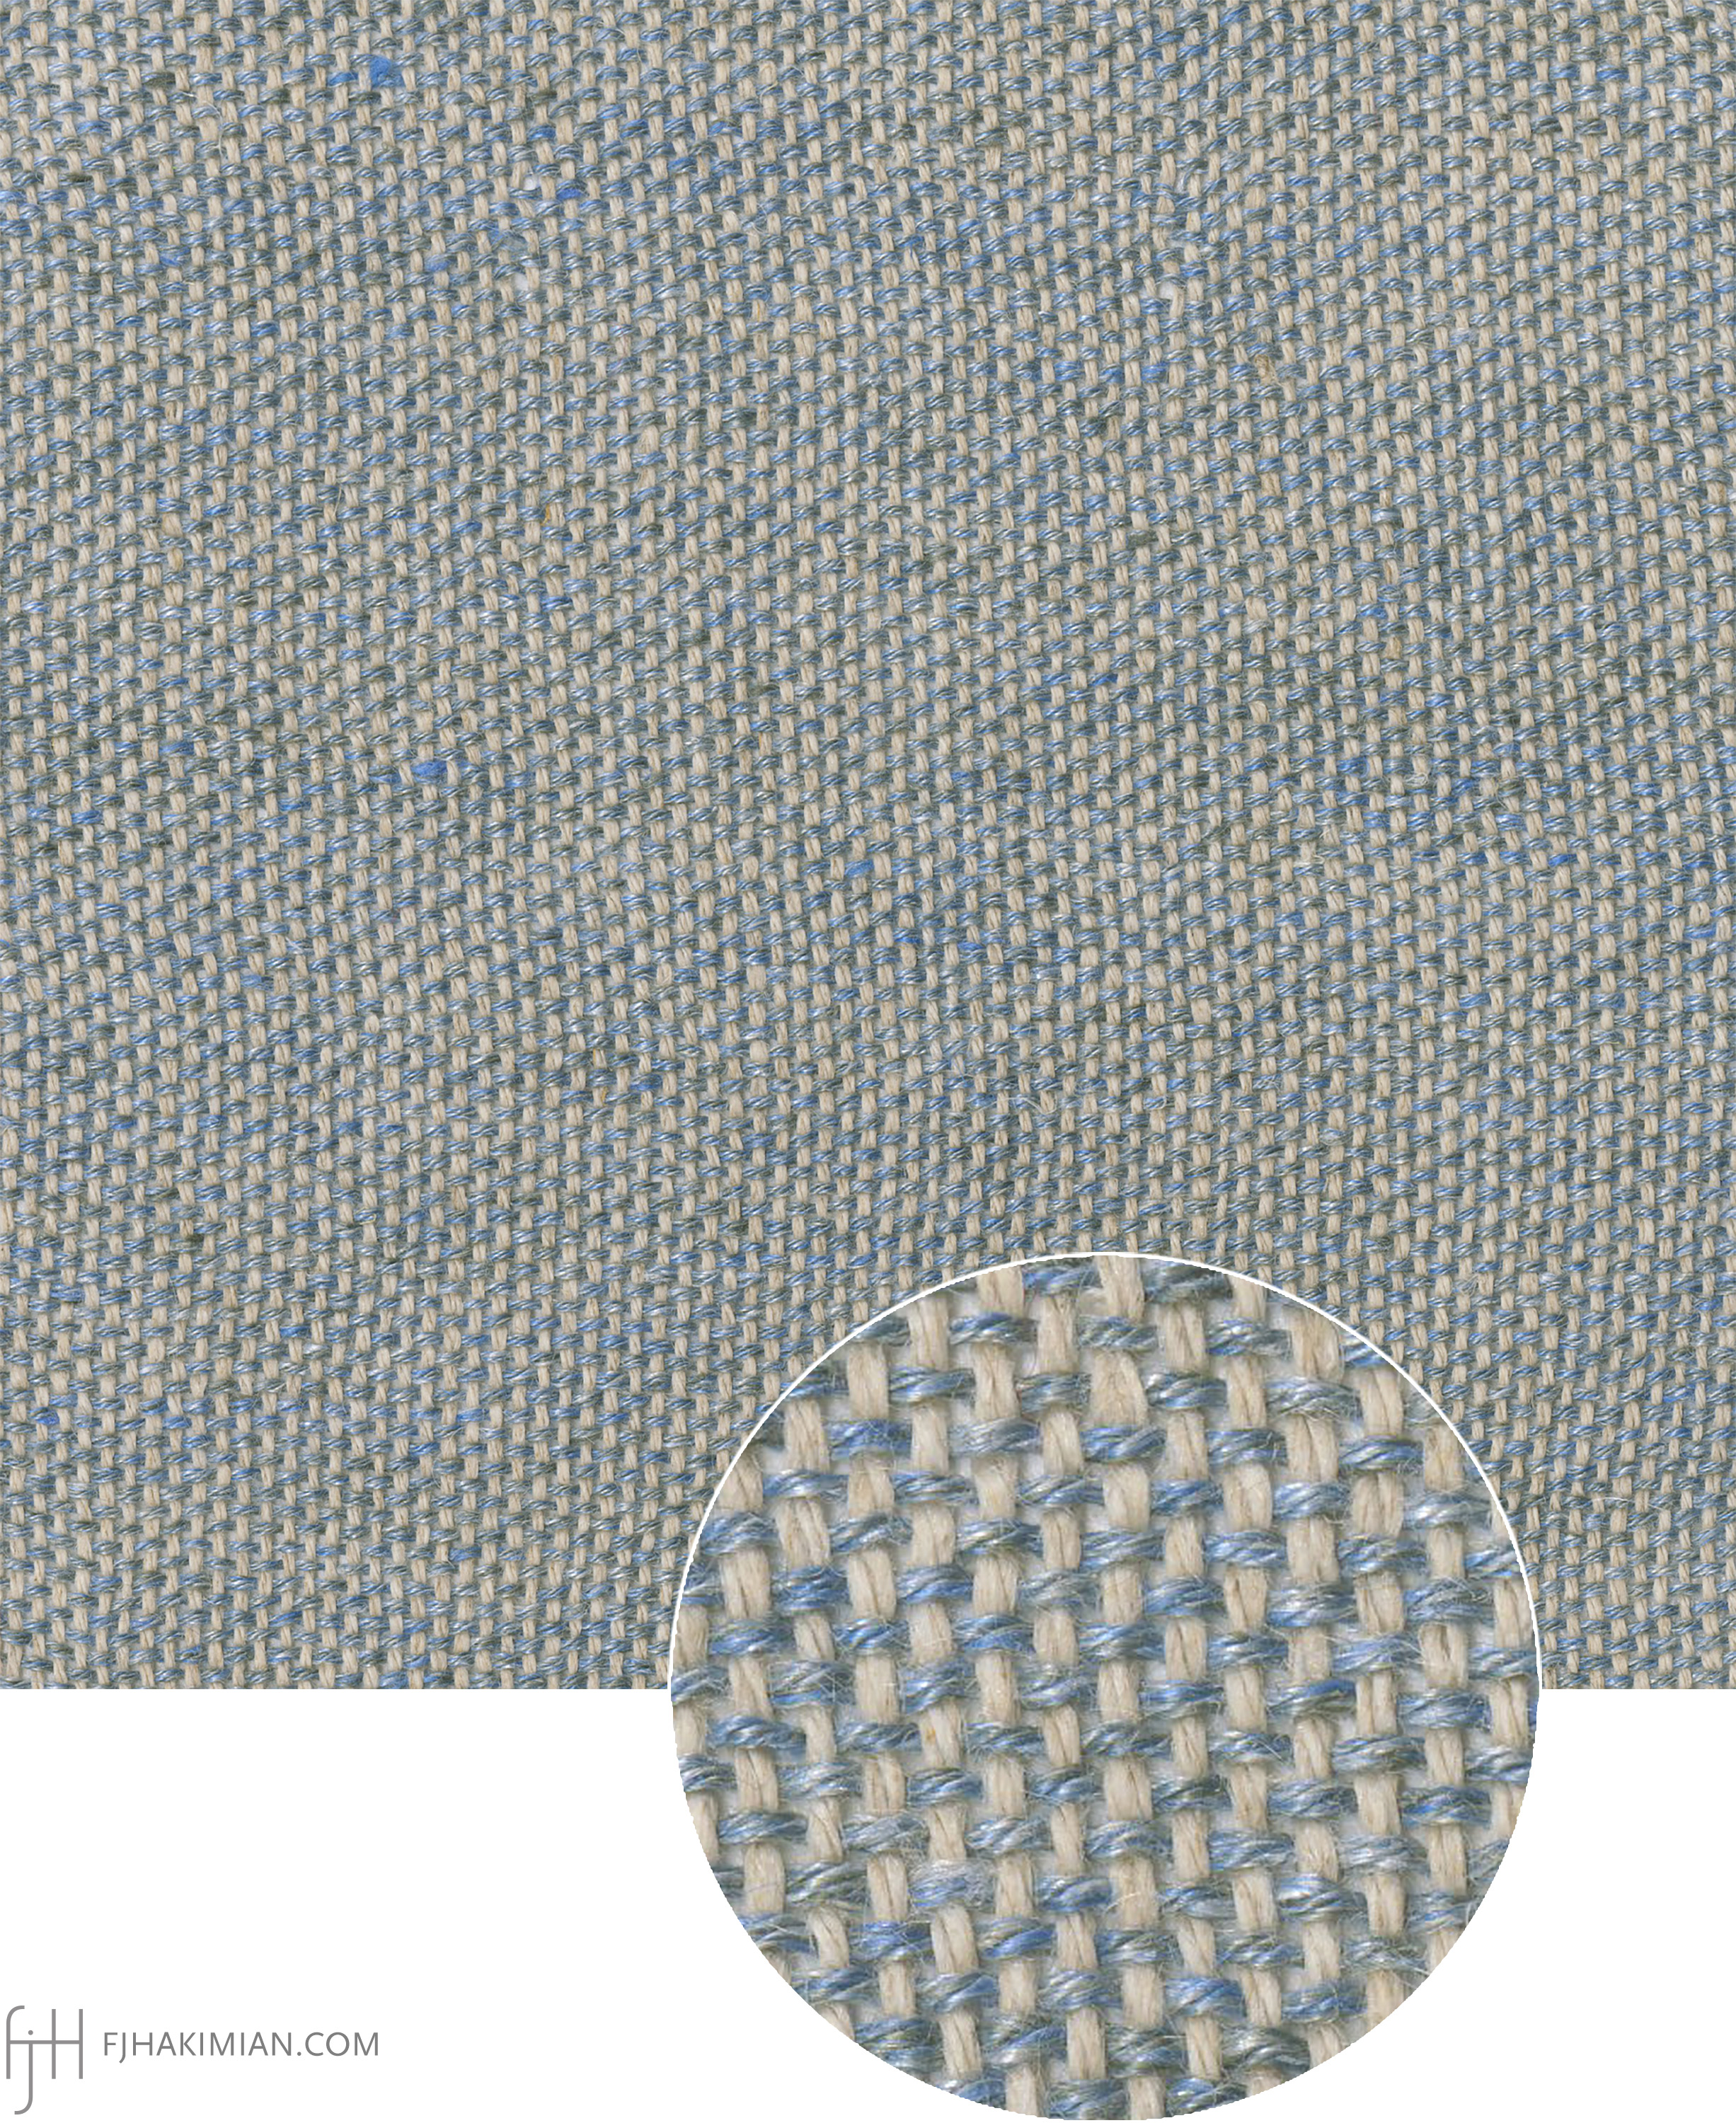 AB-LI-16 Upholstery Fabric | FJ Hakimian Carpet Gallery, New York 